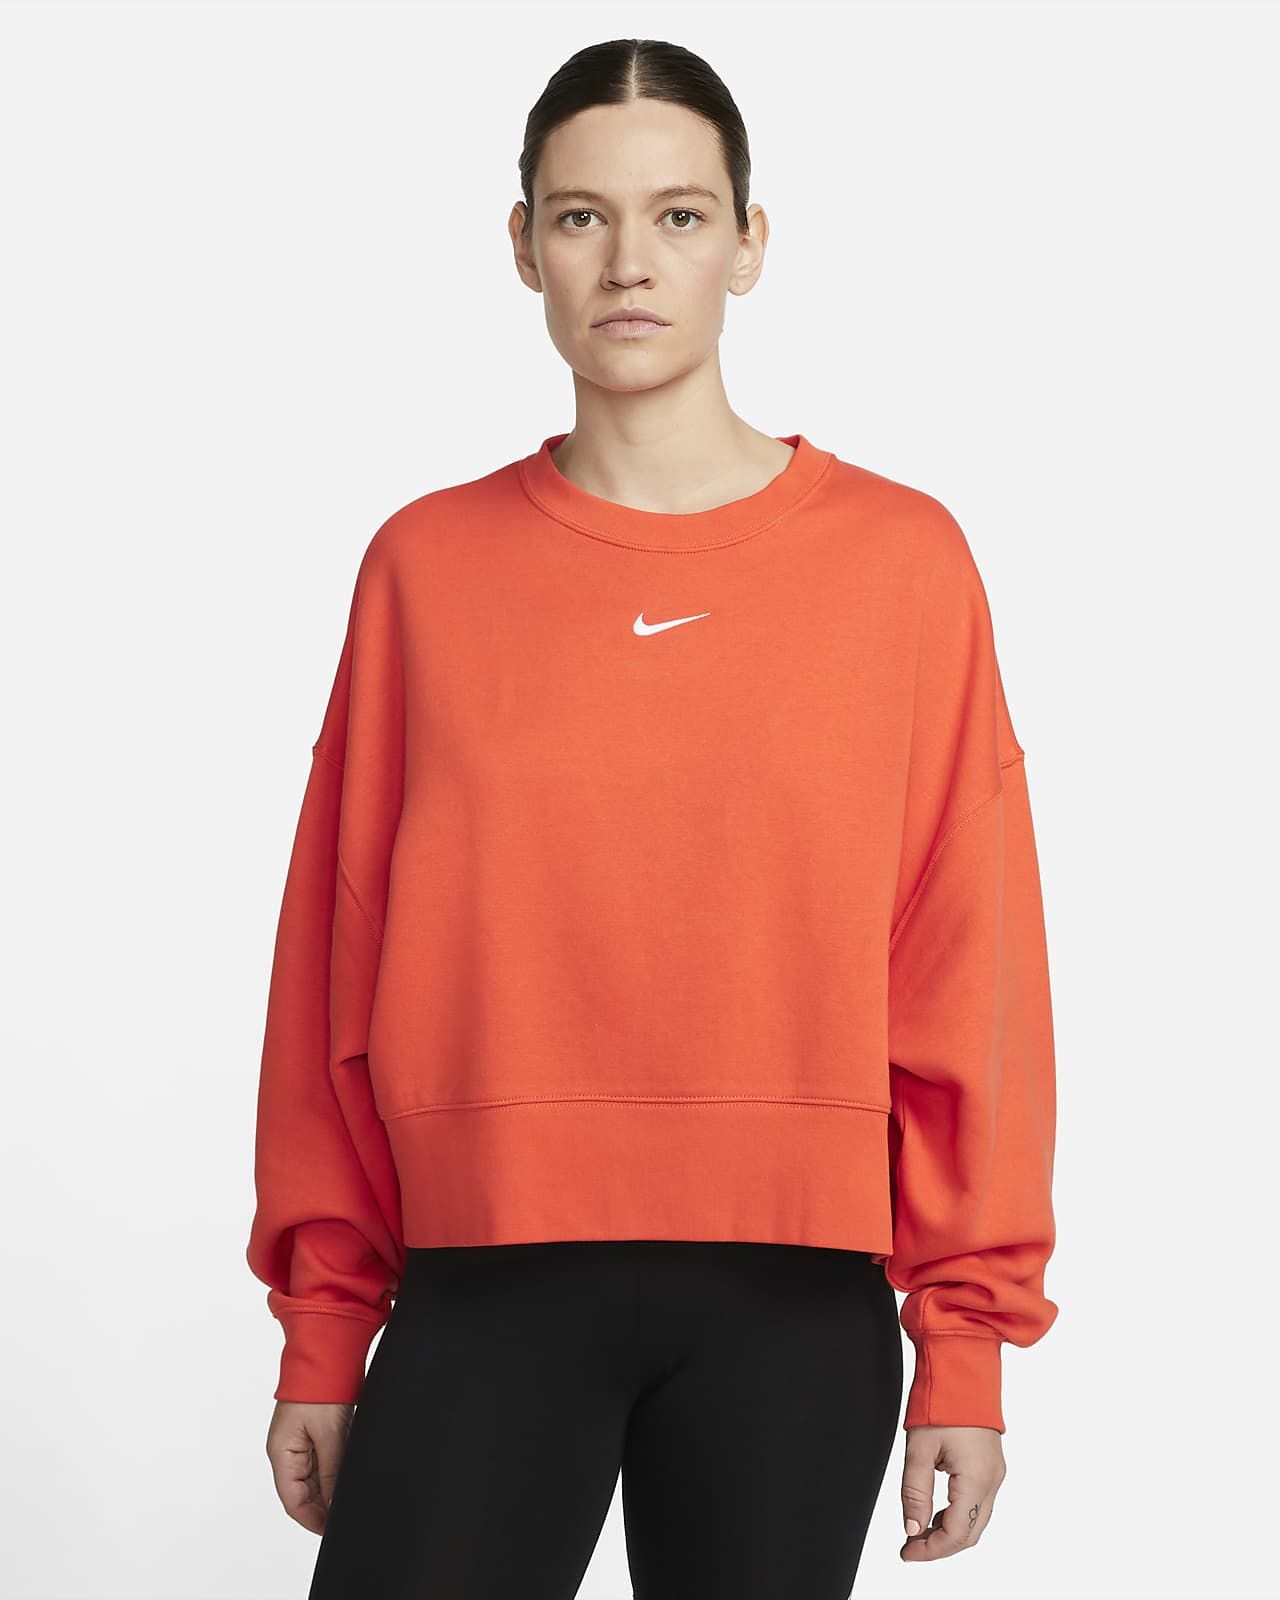 Nike Sportswear Collection EssentialsWomen's Oversized Fleece Crew$60 | Nike (US)